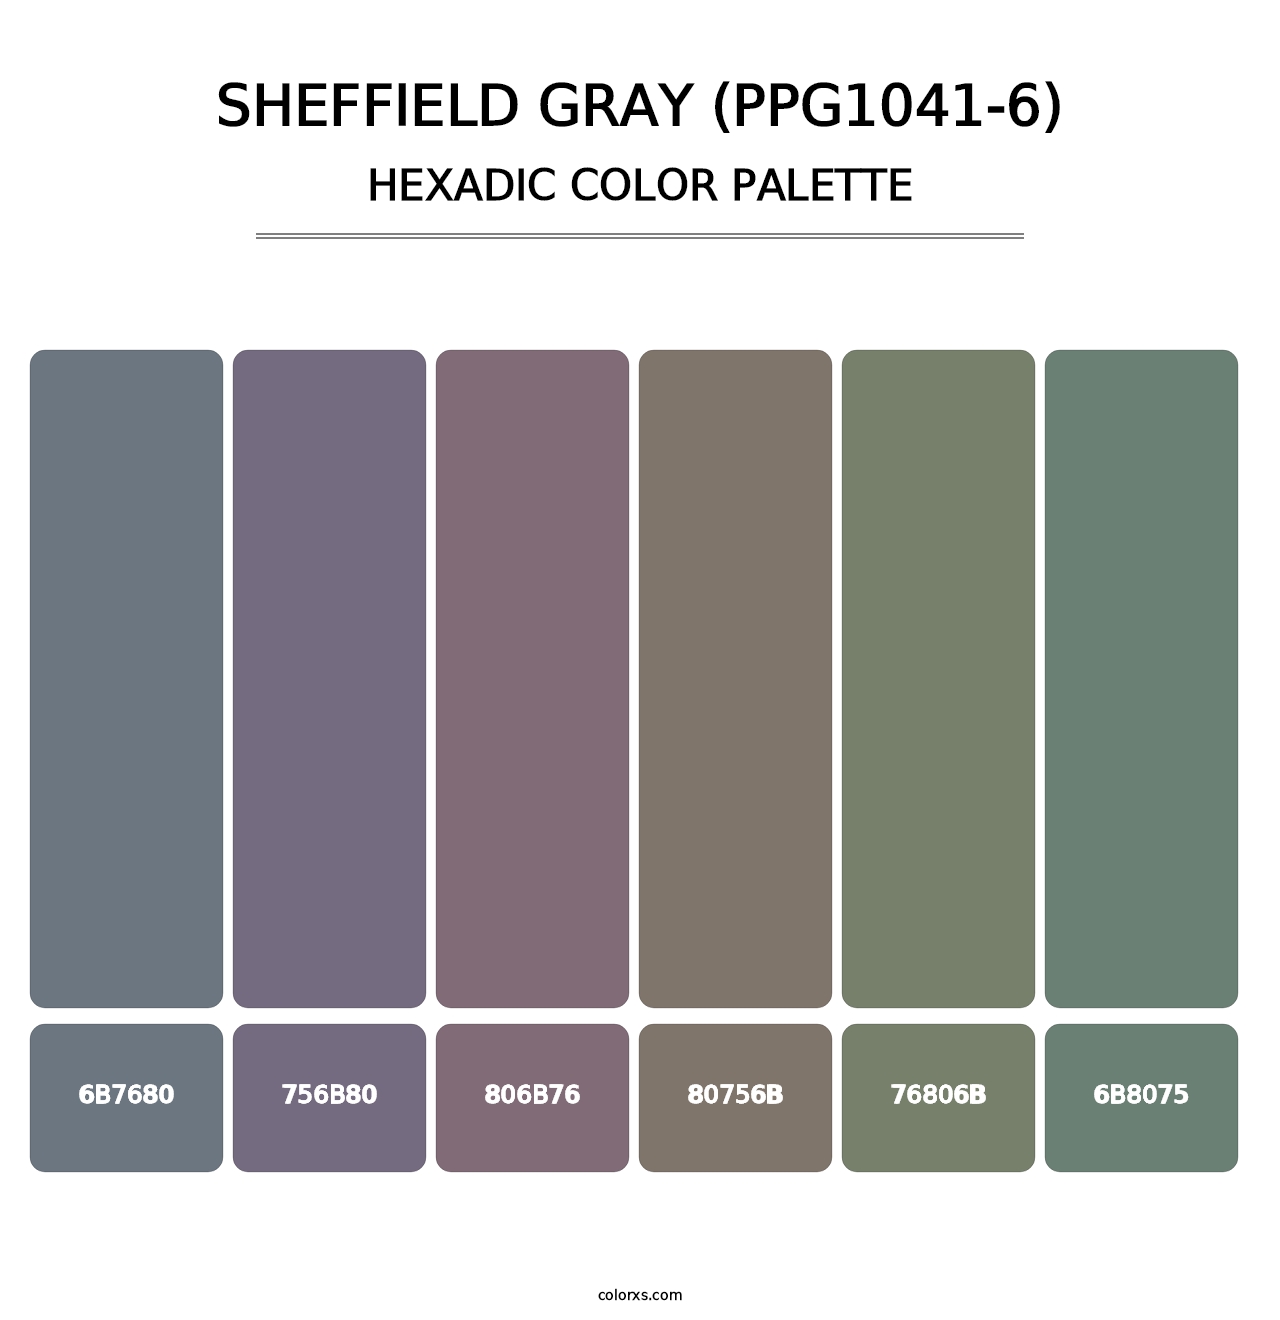 Sheffield Gray (PPG1041-6) - Hexadic Color Palette